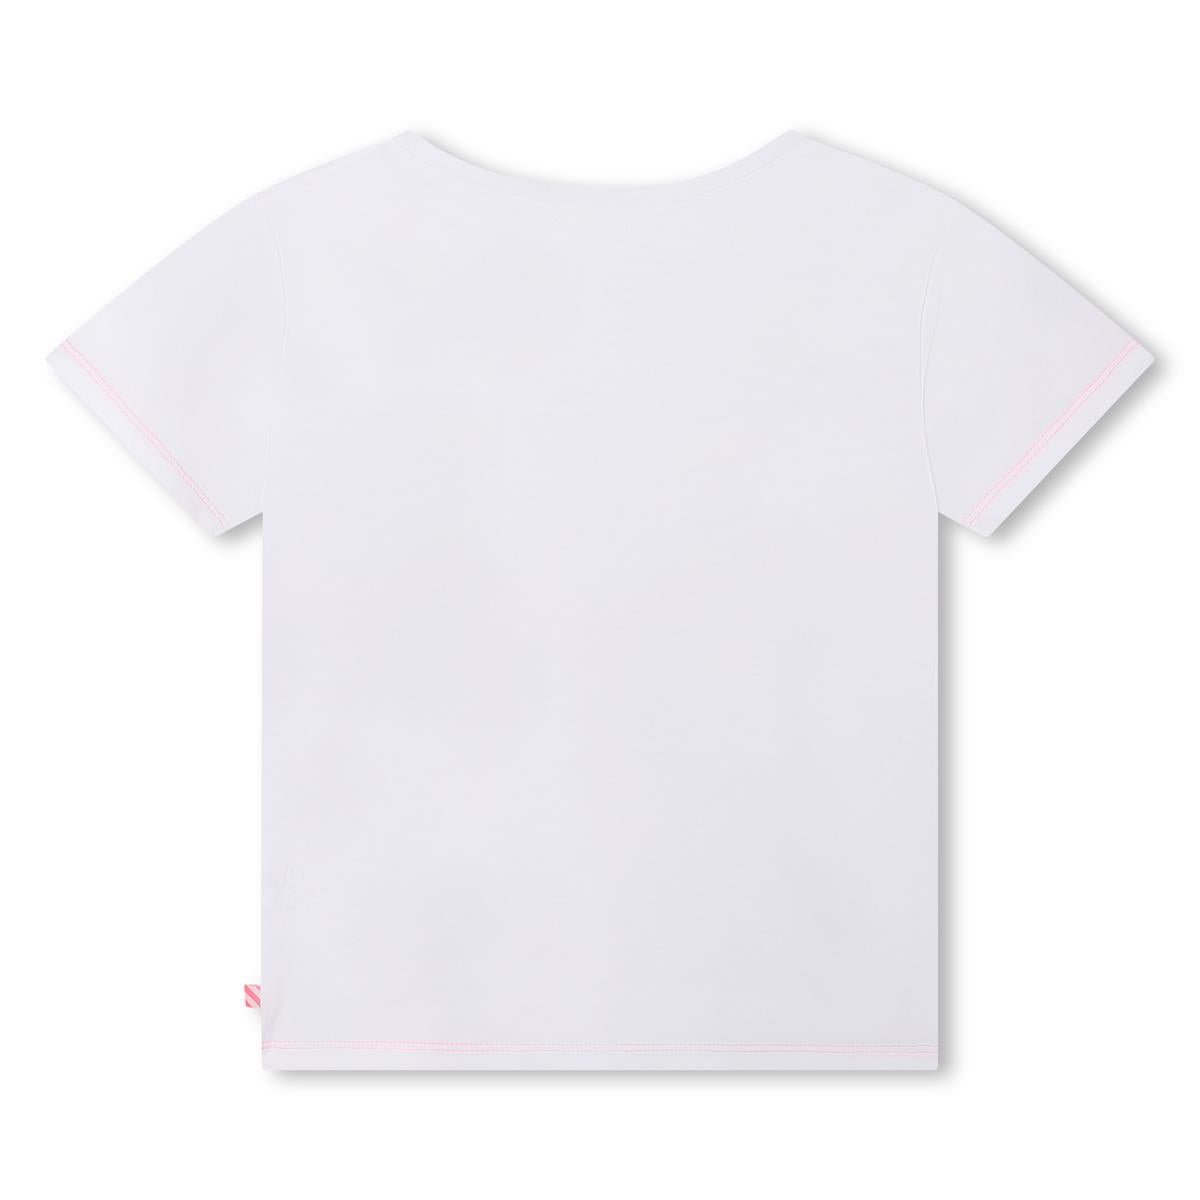 Girls White Butterfly T-Shirt